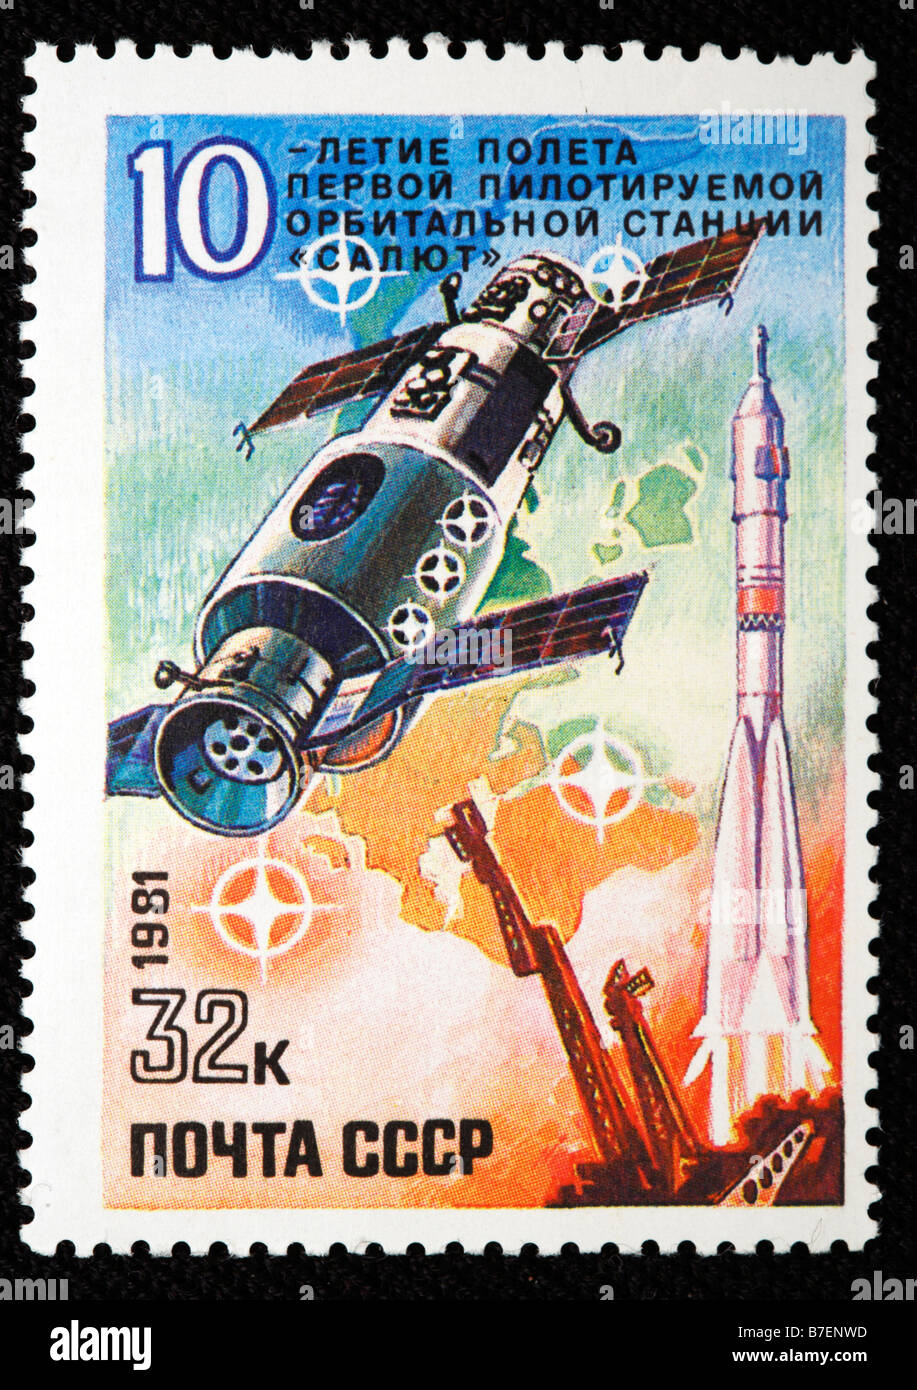 Sowjetischen Raum Orbitalstation "Salut", Briefmarke, UdSSR, 1981 Stockfoto